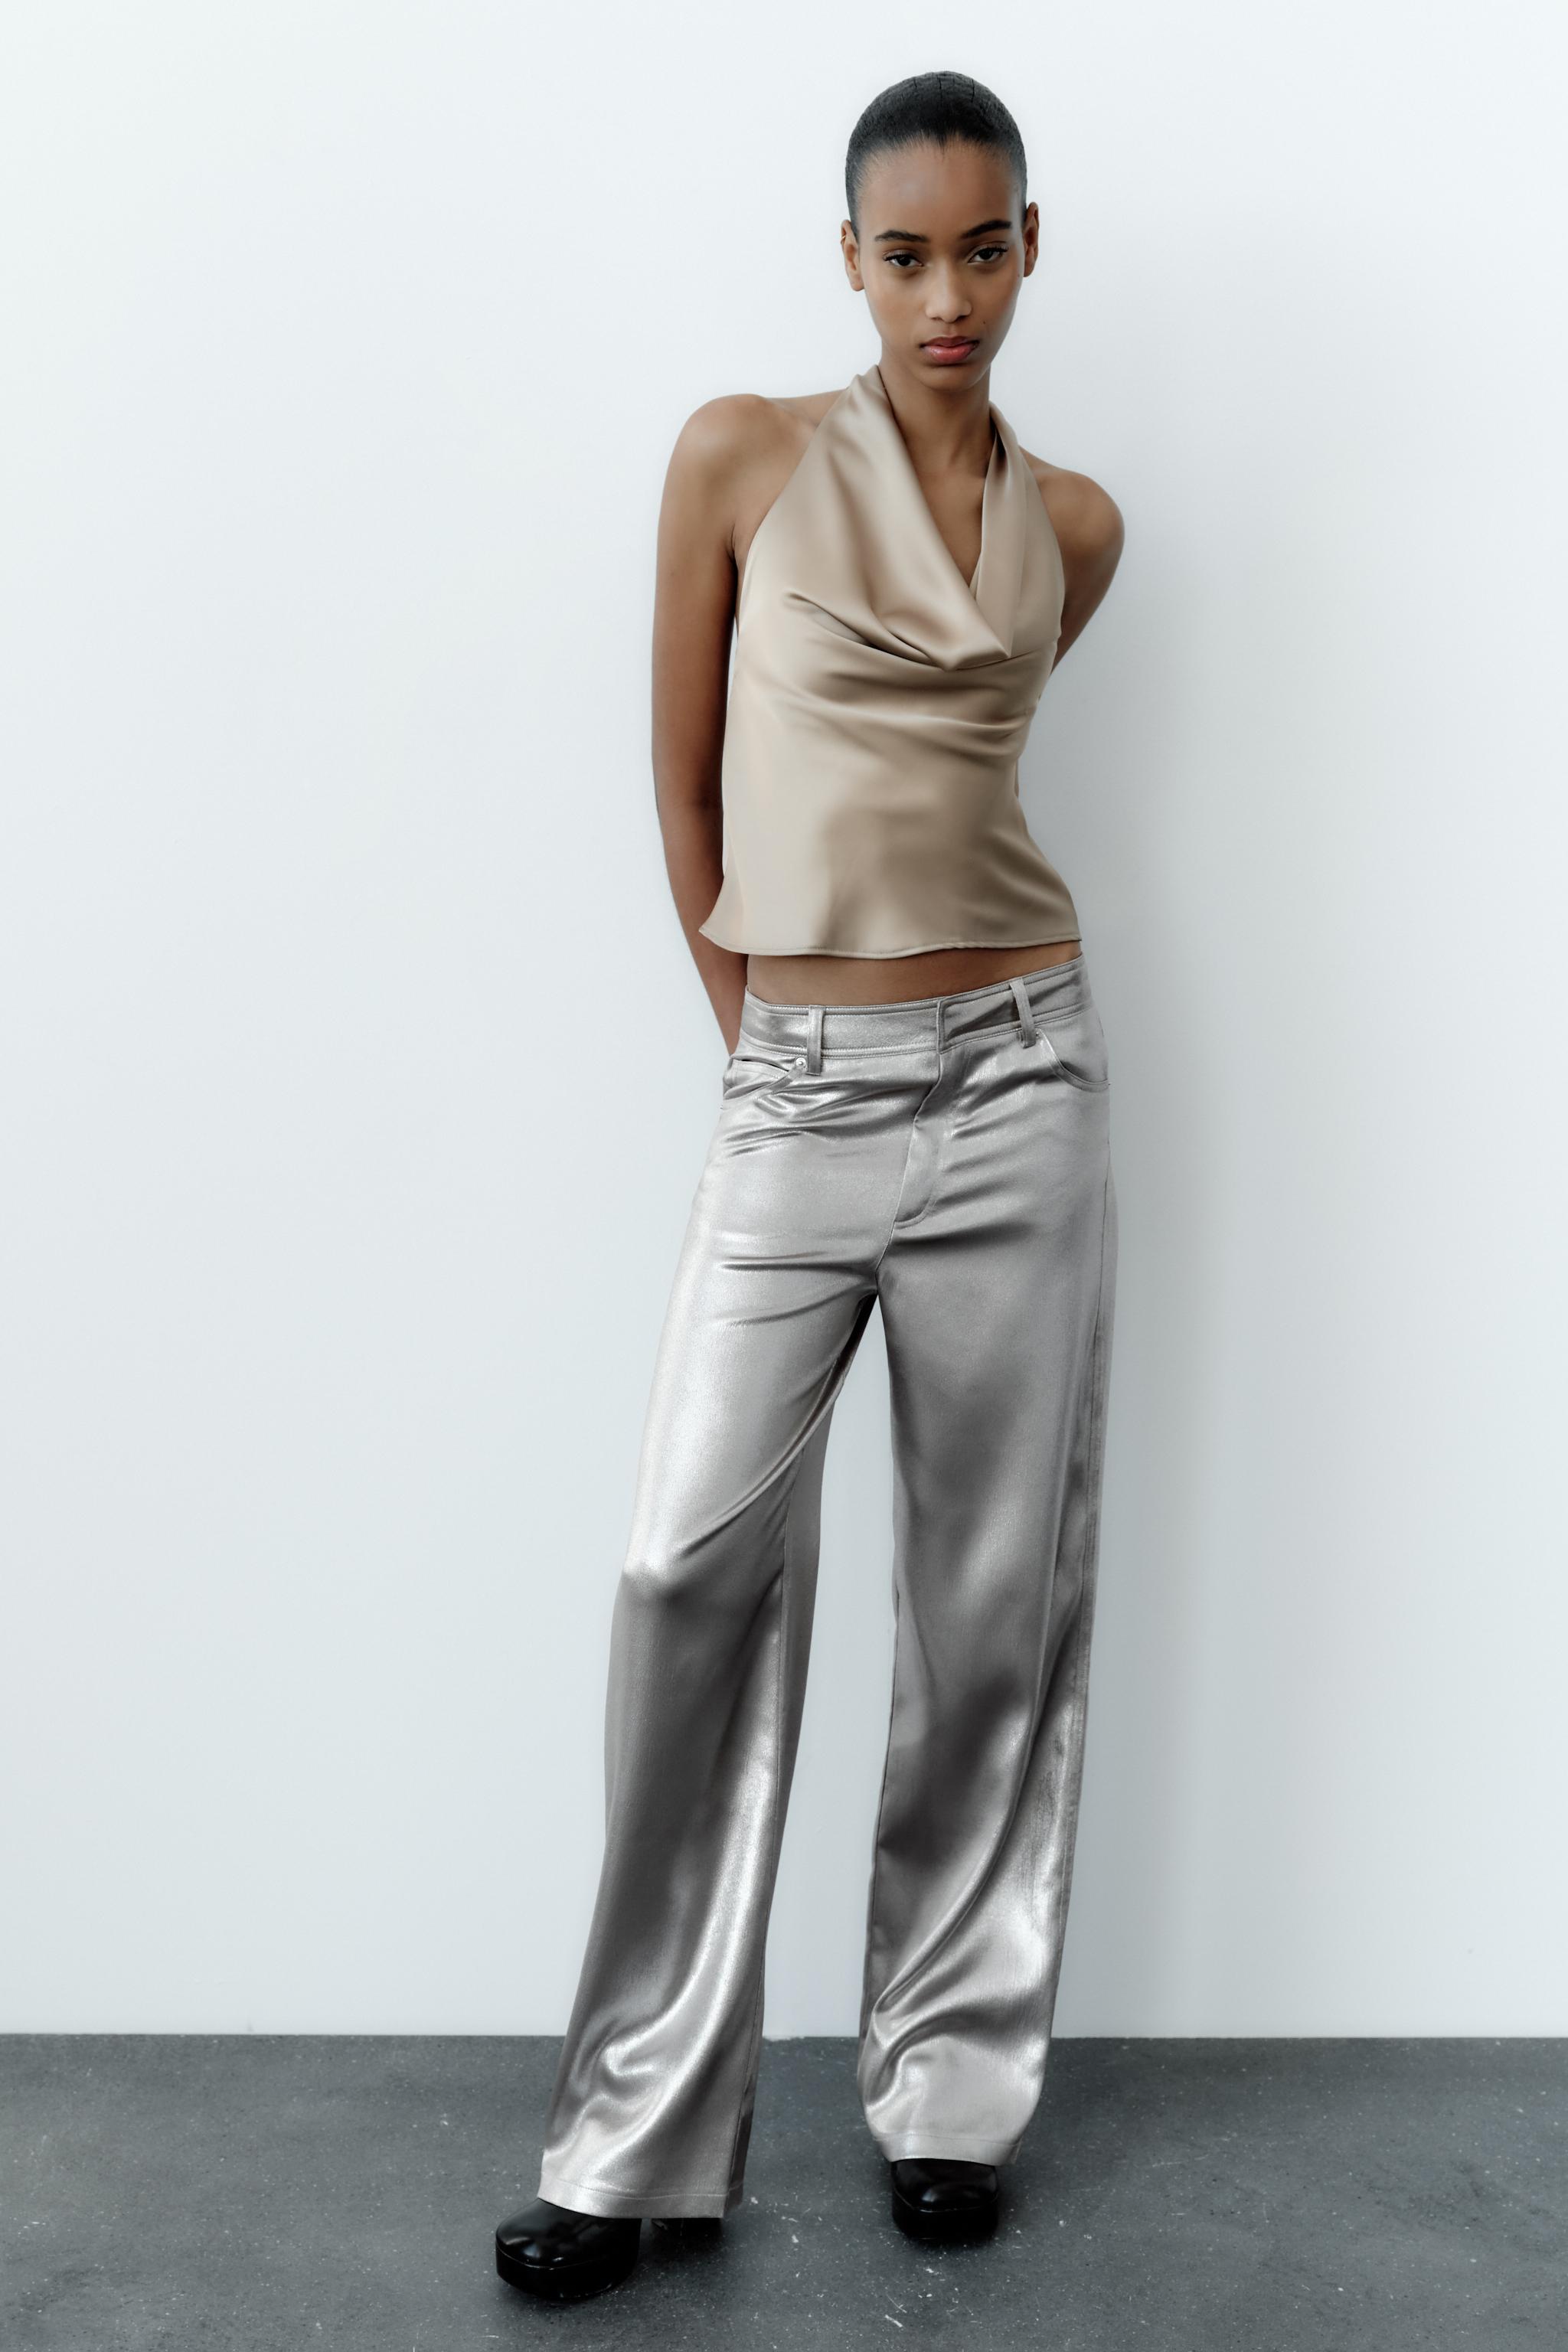 Zara Woman Black and White Halter Top, Tie Back, Size Medium